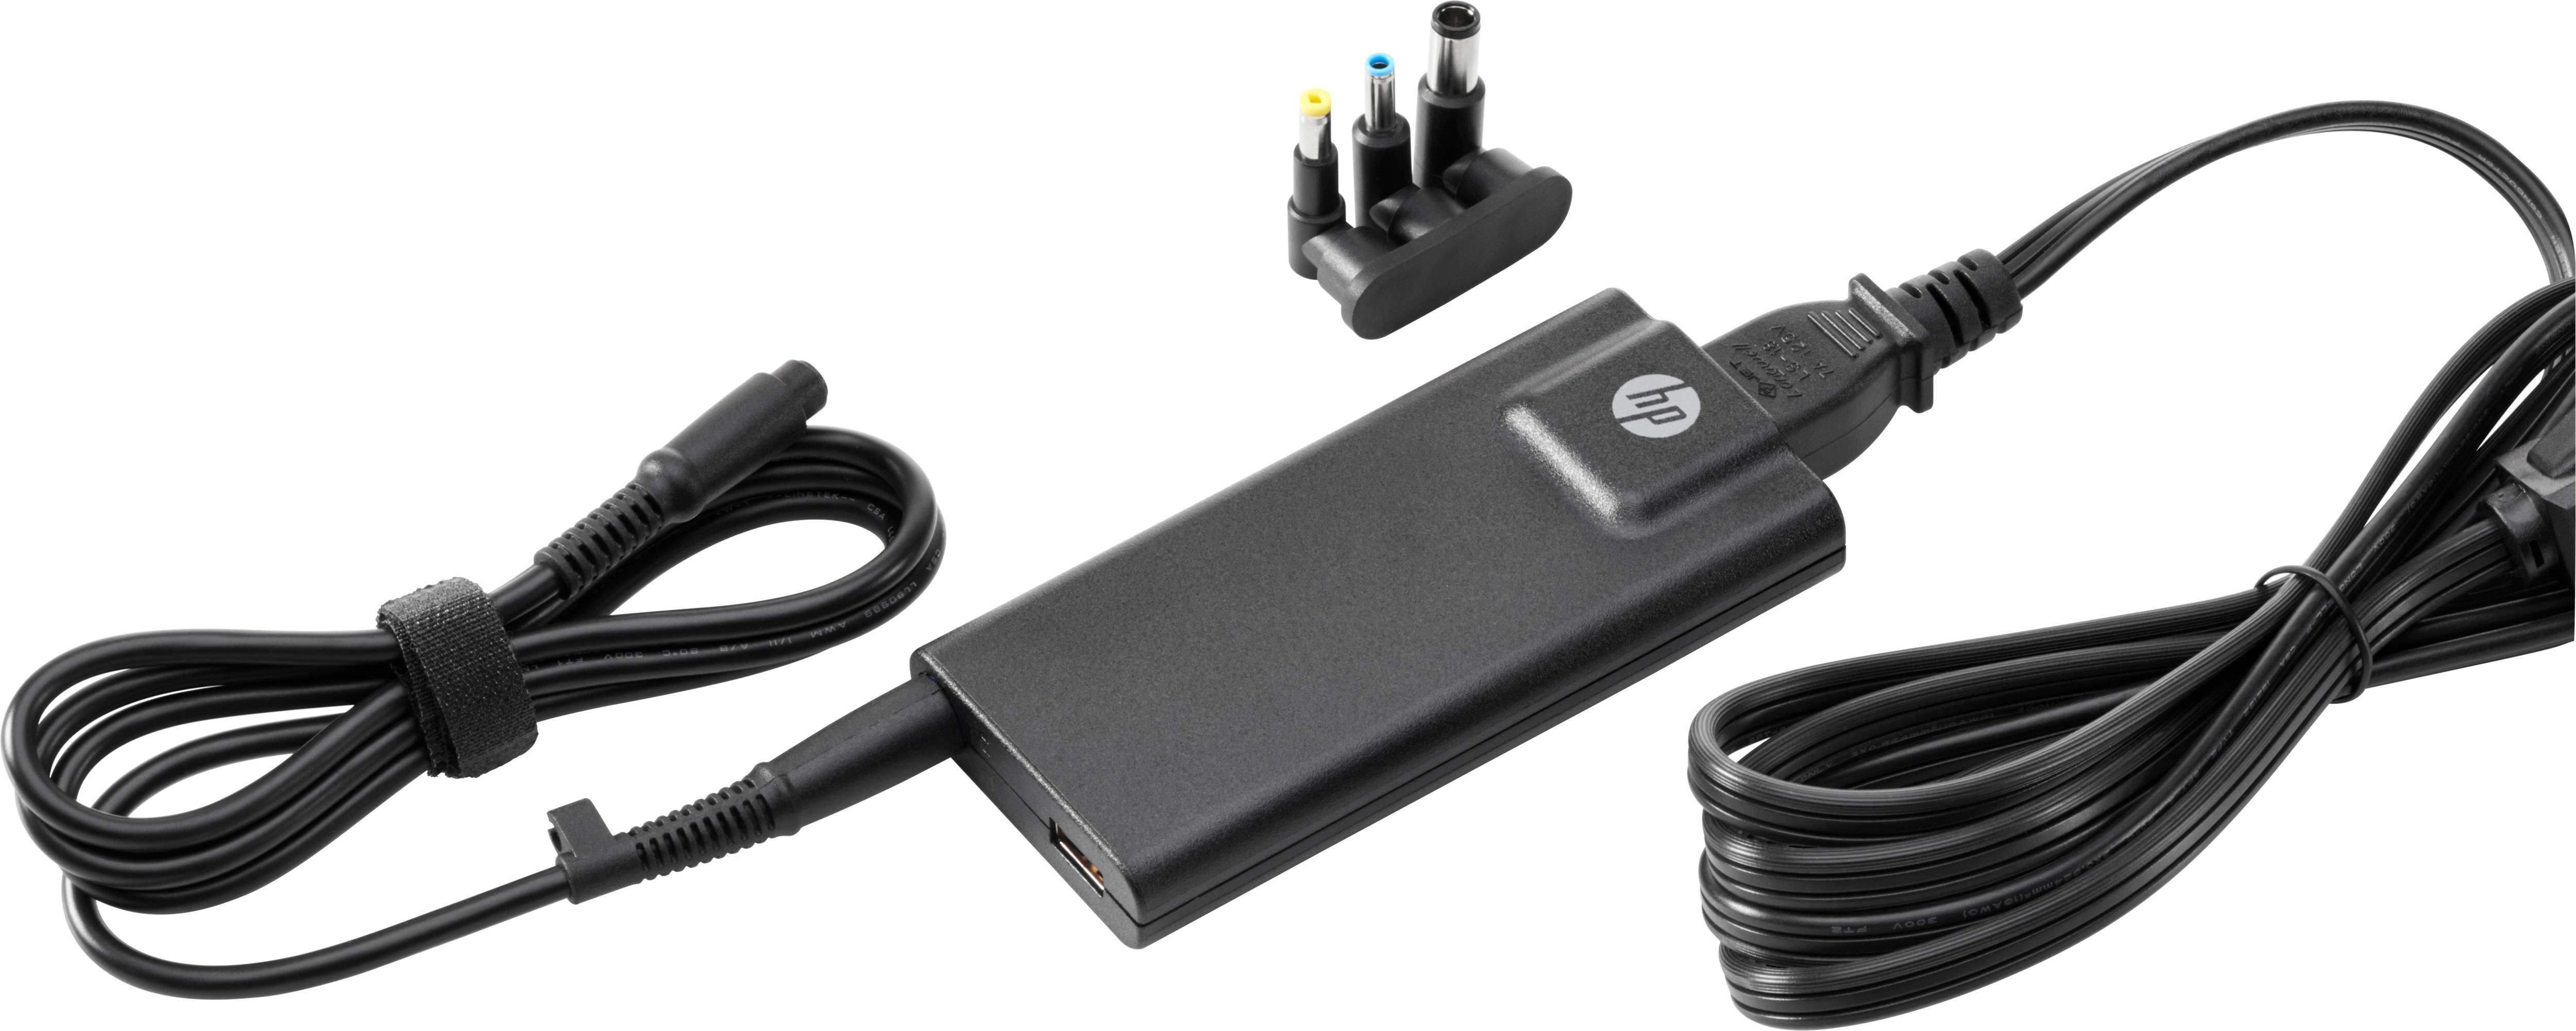 Rca Informatique - Image du produit : 65W SLIM W/USB ADAPTER INTERCHANGEABLE TIPS